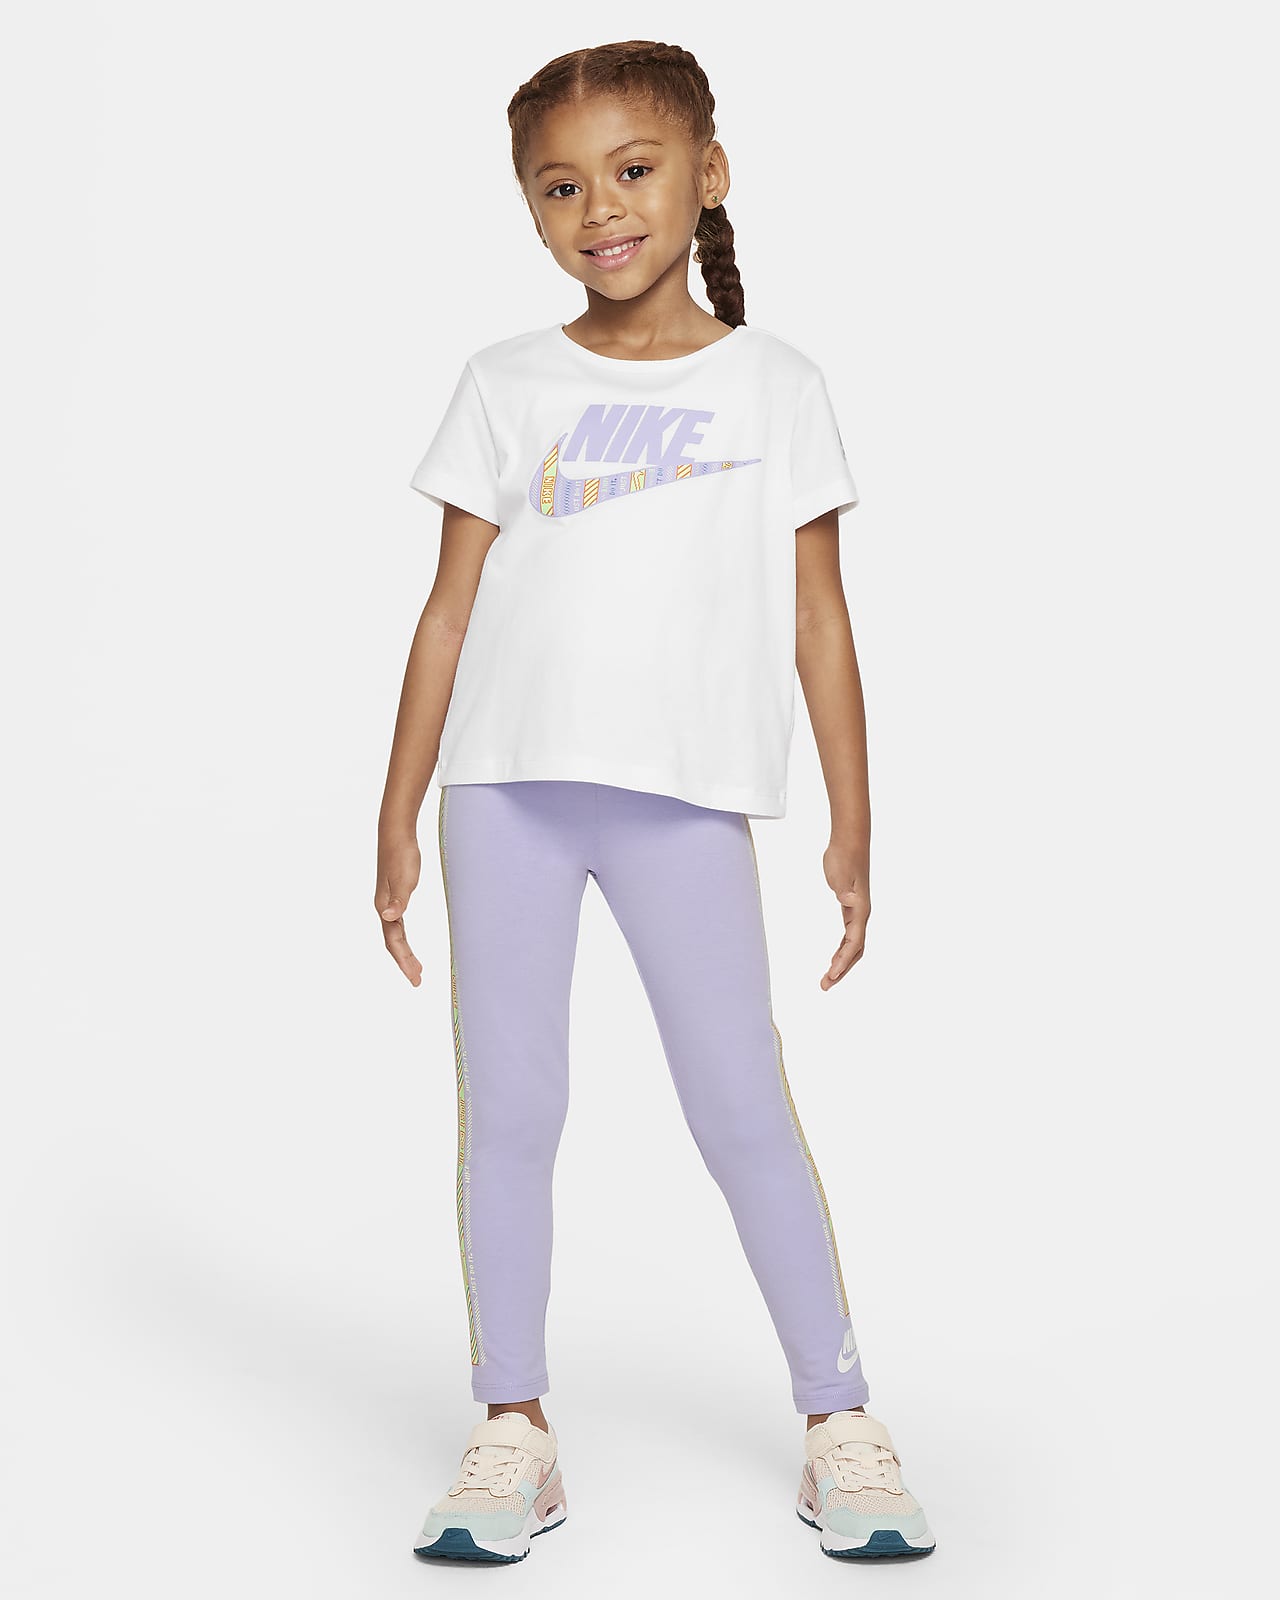 Nike Happy Camper Conjunt amb leggings - Nen/a petit/a